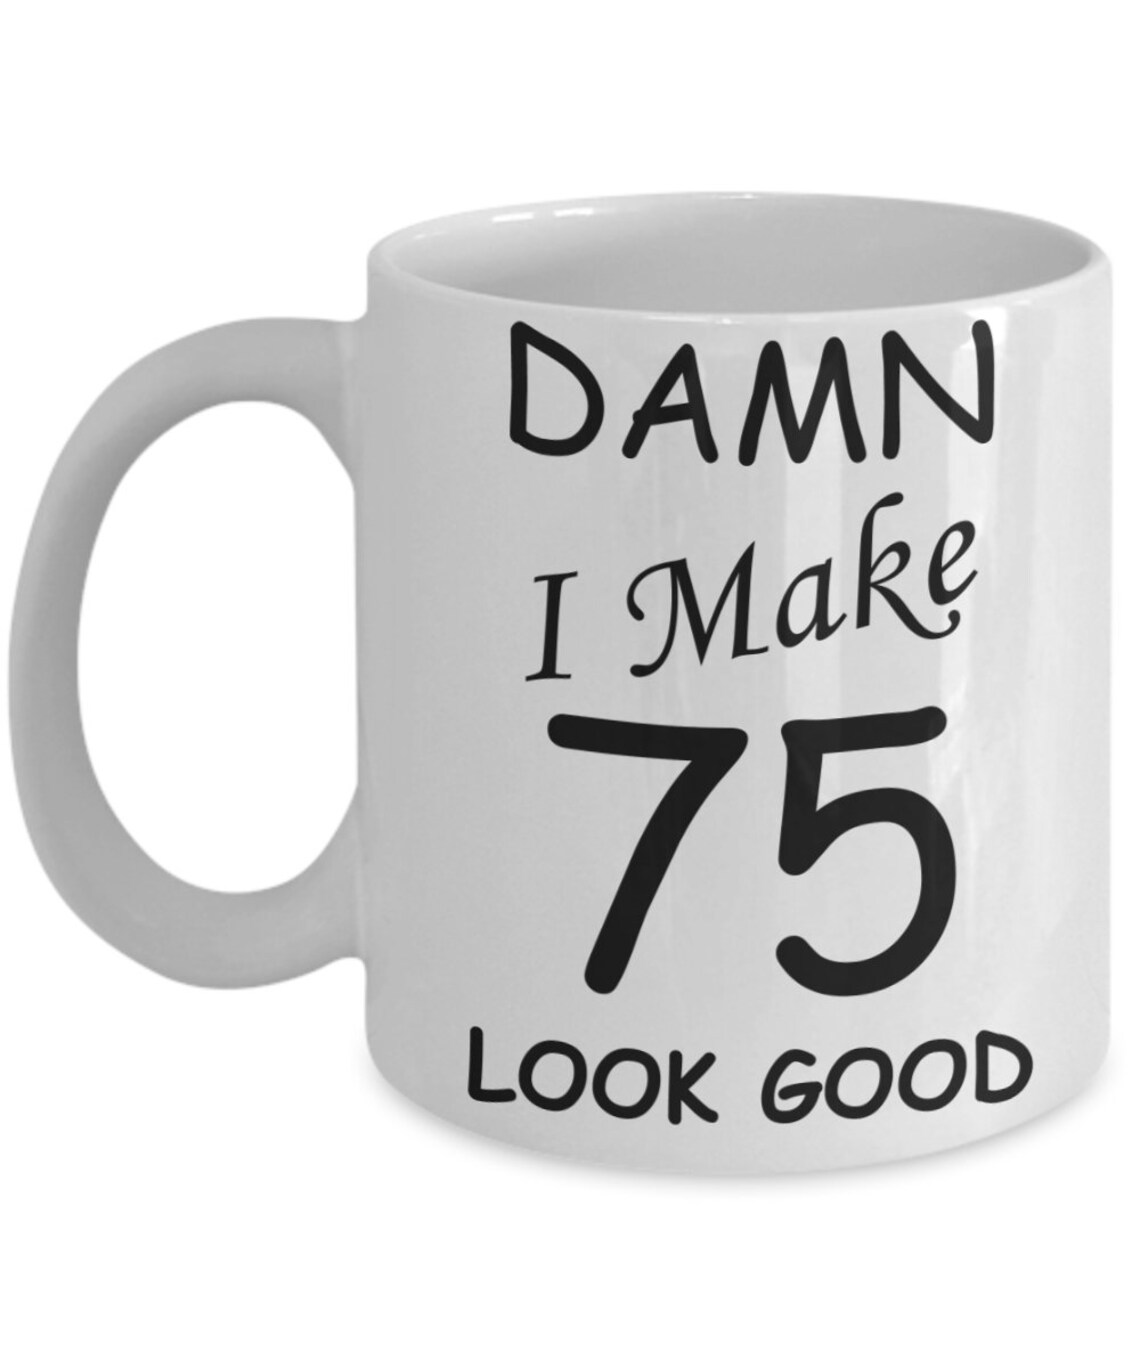 75th birthday gifts for men/women damn i make 75 look good